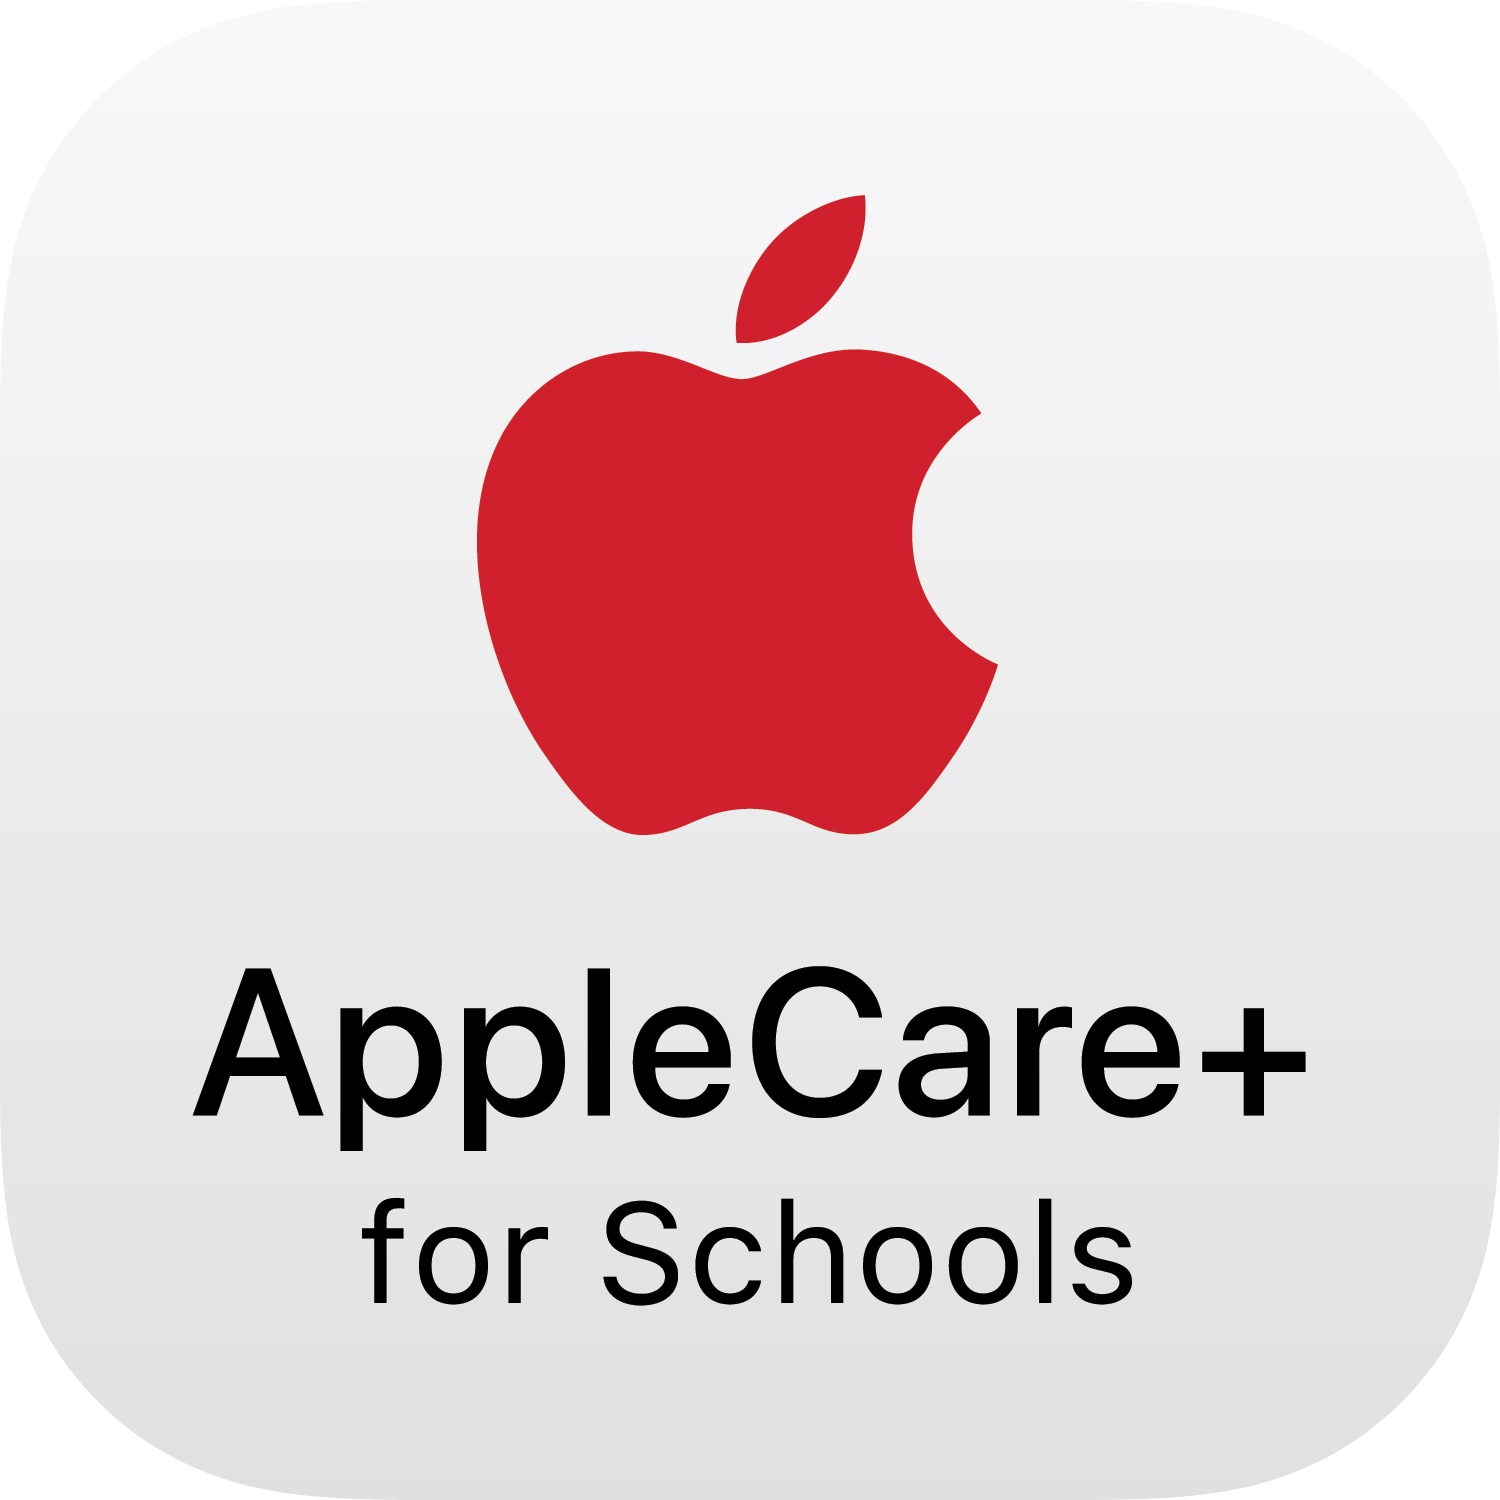 Applecare+ for Schools - M3 Macbook Air 13" - 4-Year - NSF